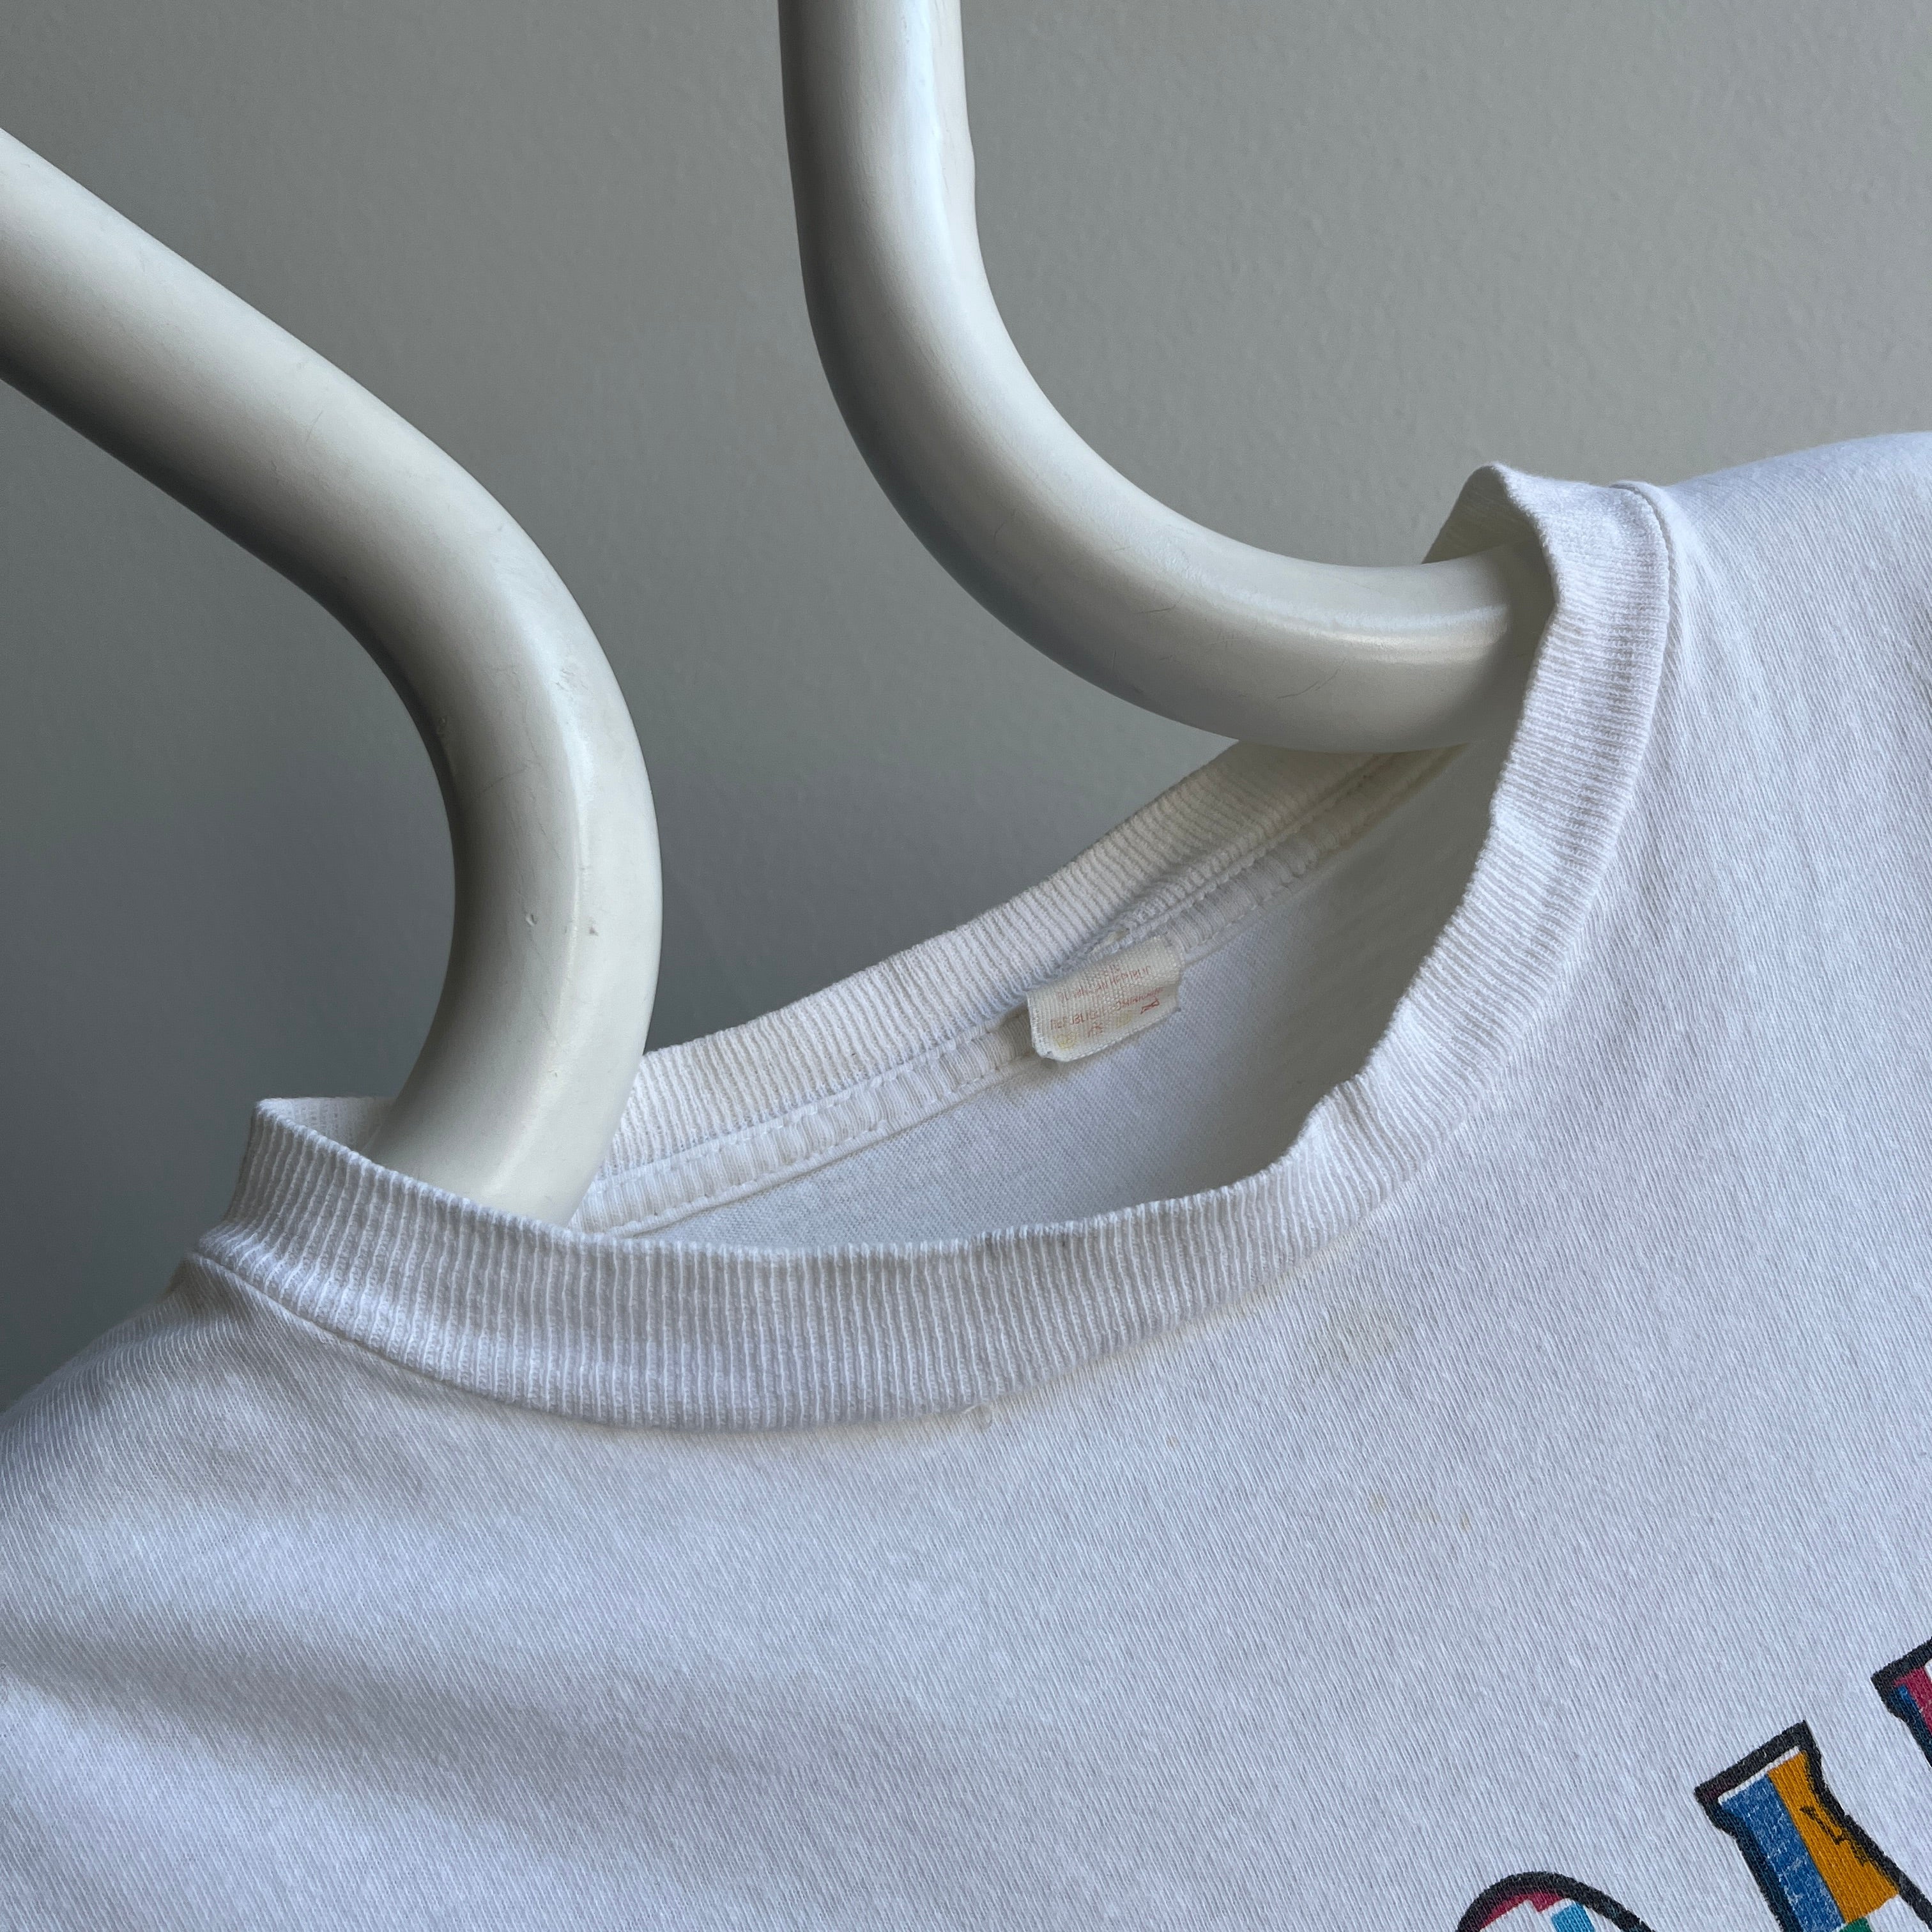 1980s Perfectly Worn Toronto Tourist T-Shirt